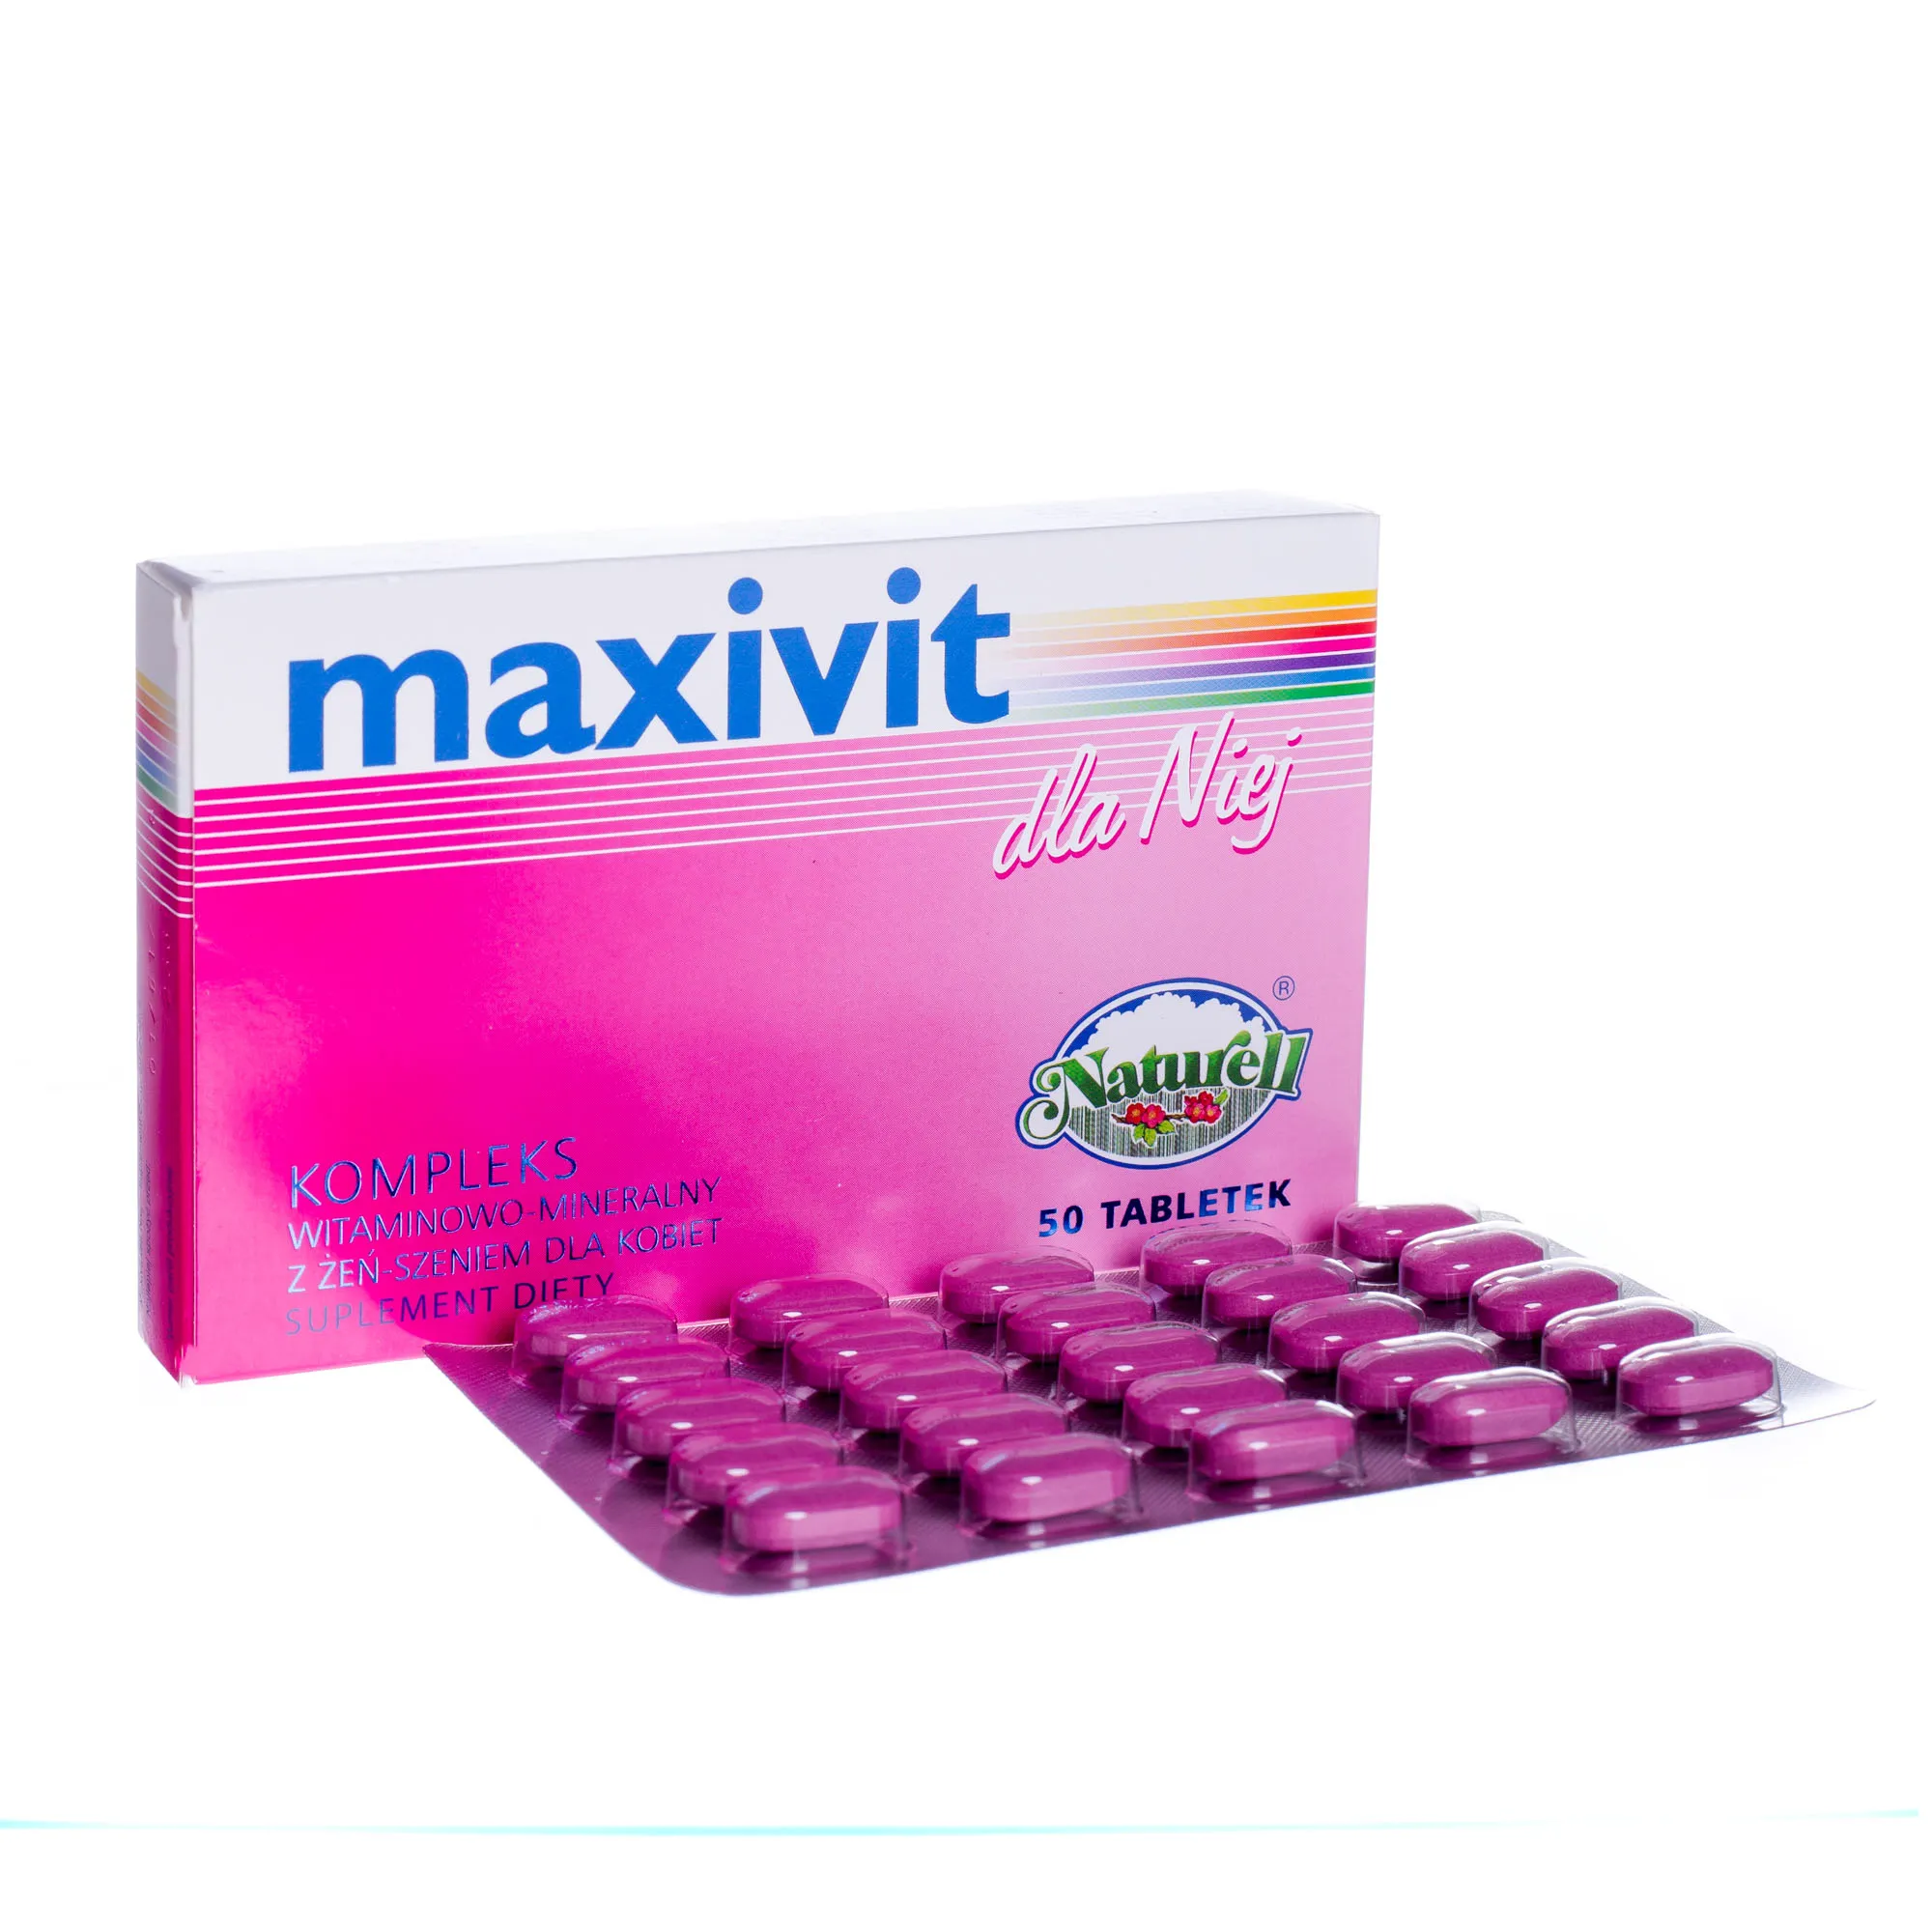 Maxivit dla niej, suplement diety, 50 tabletek 